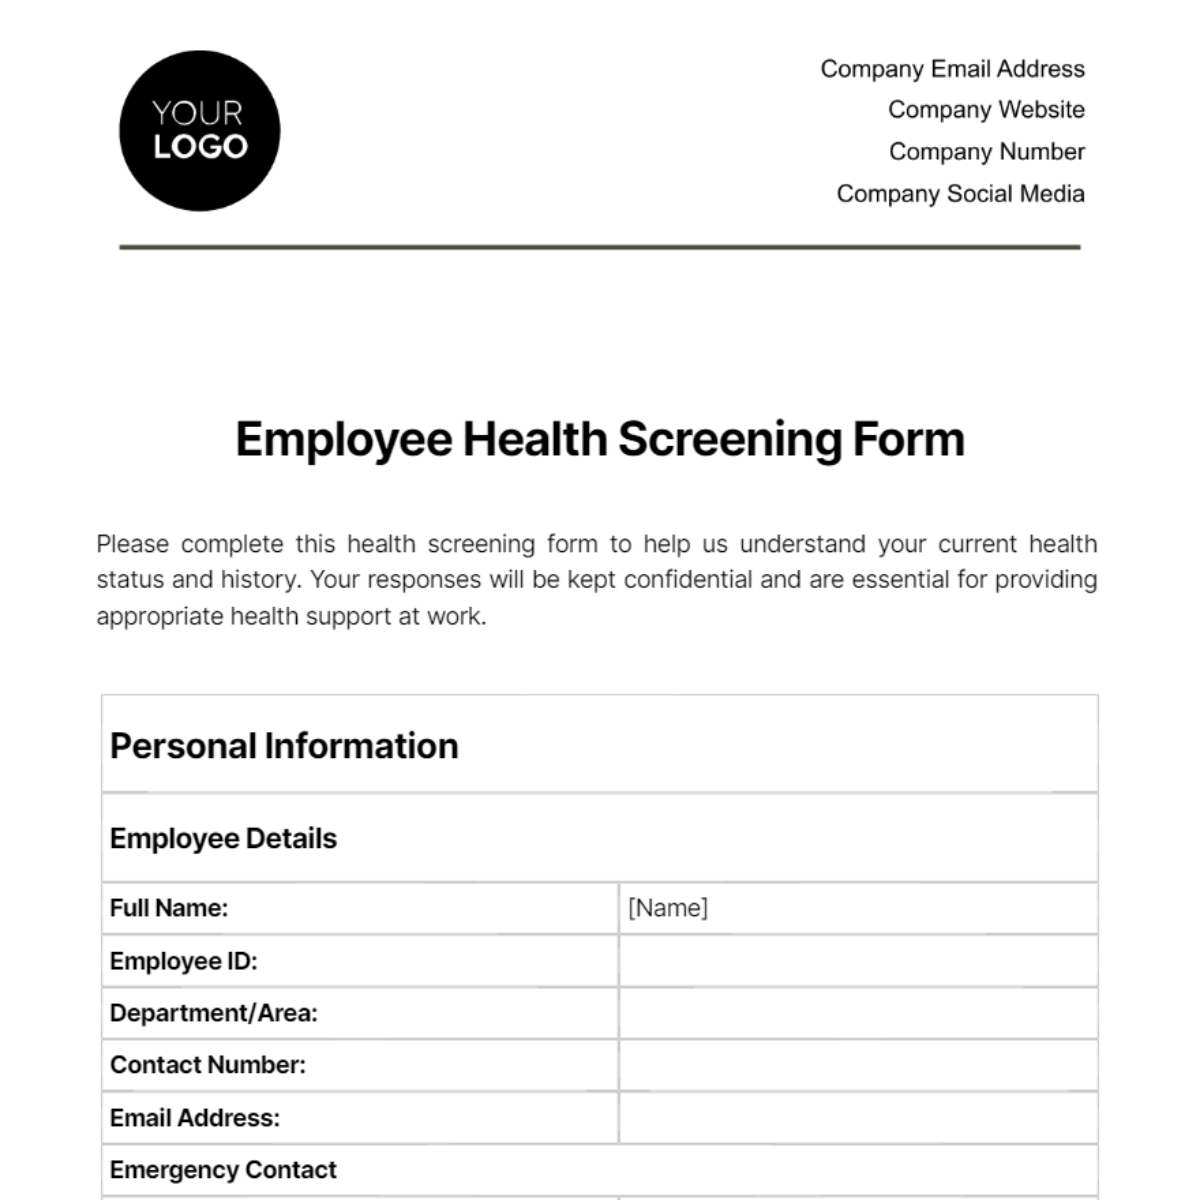 Employee Health Screening Form Template